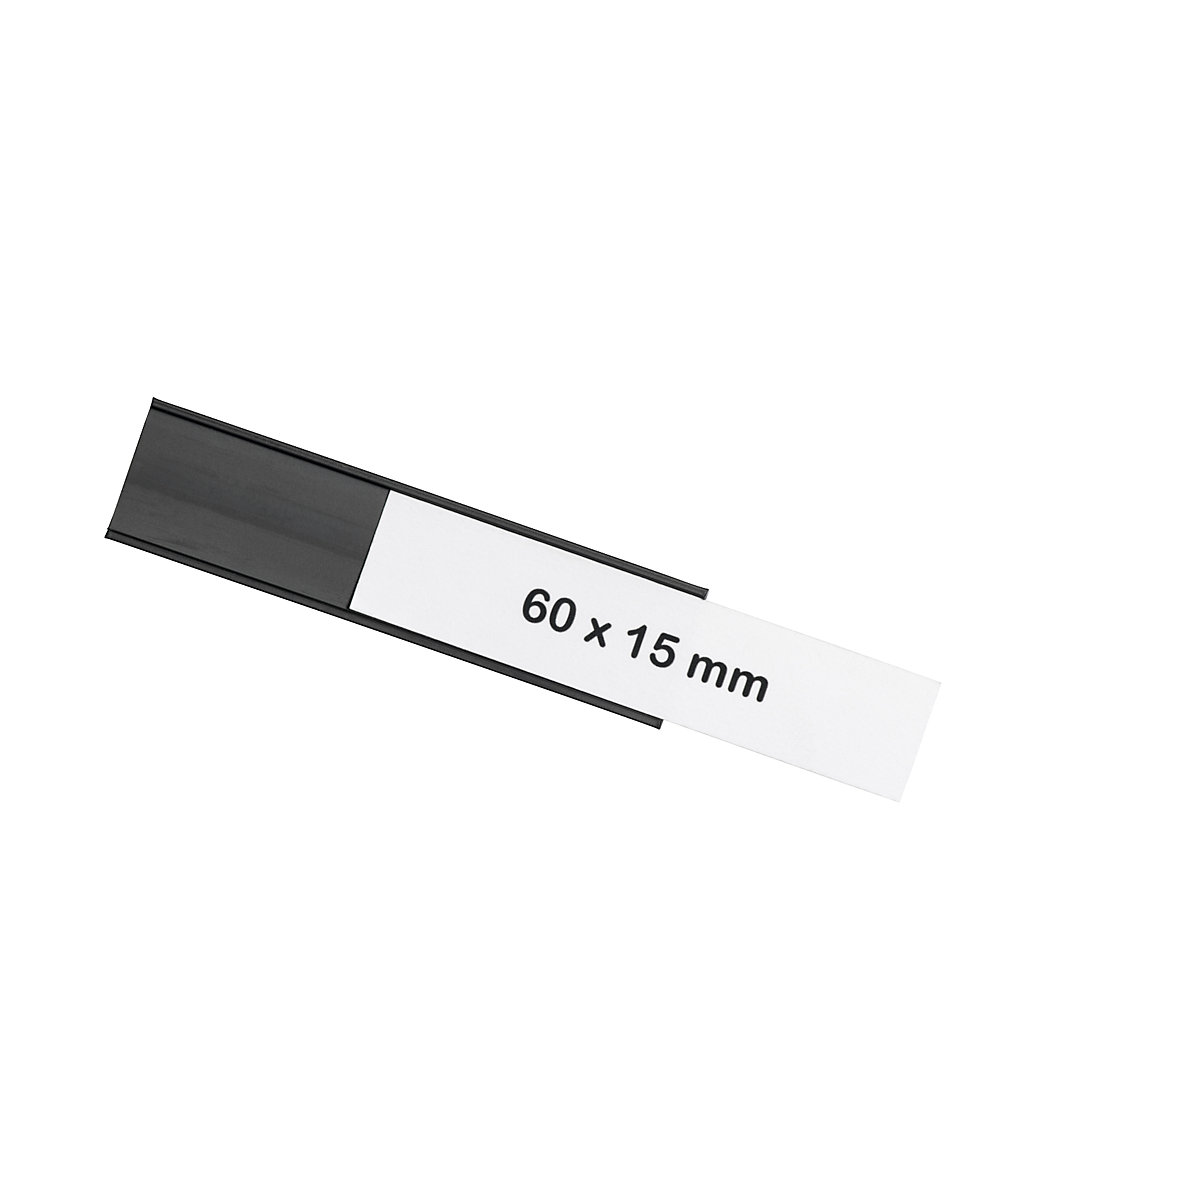 magnetoflex® U-profile, pack of 30 – magnetoplan, HxW 15 x 60 mm, black